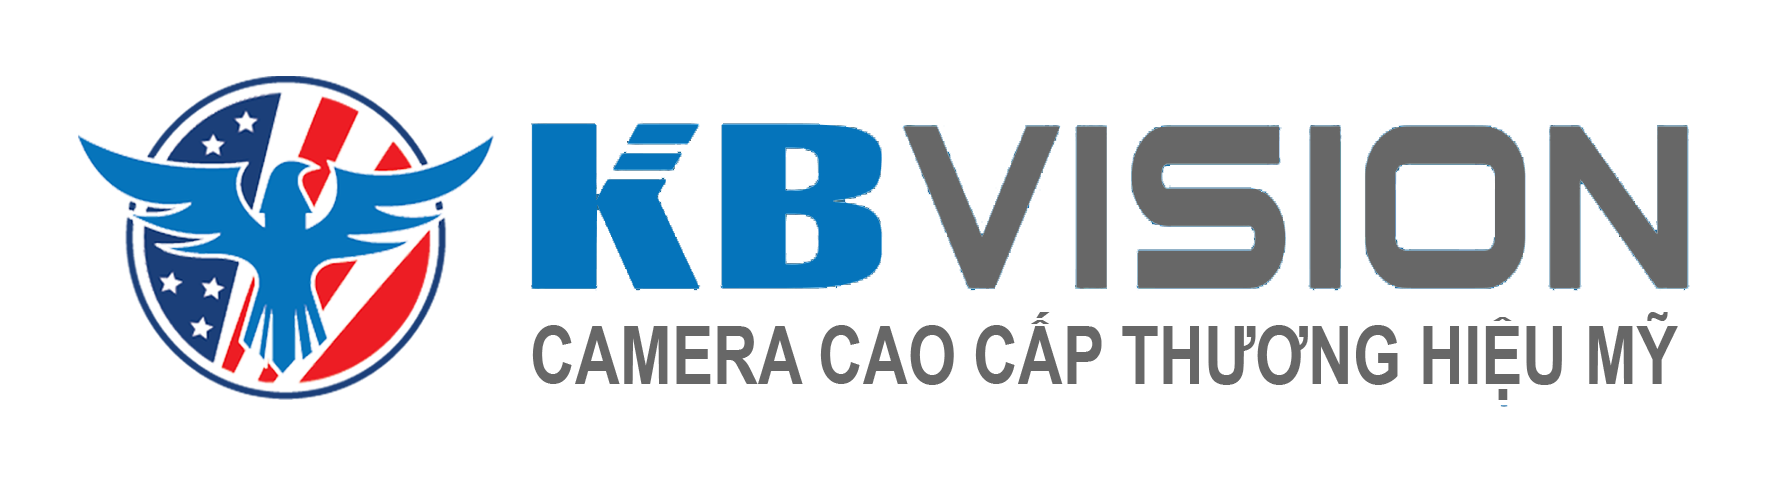 Camera Kbvision